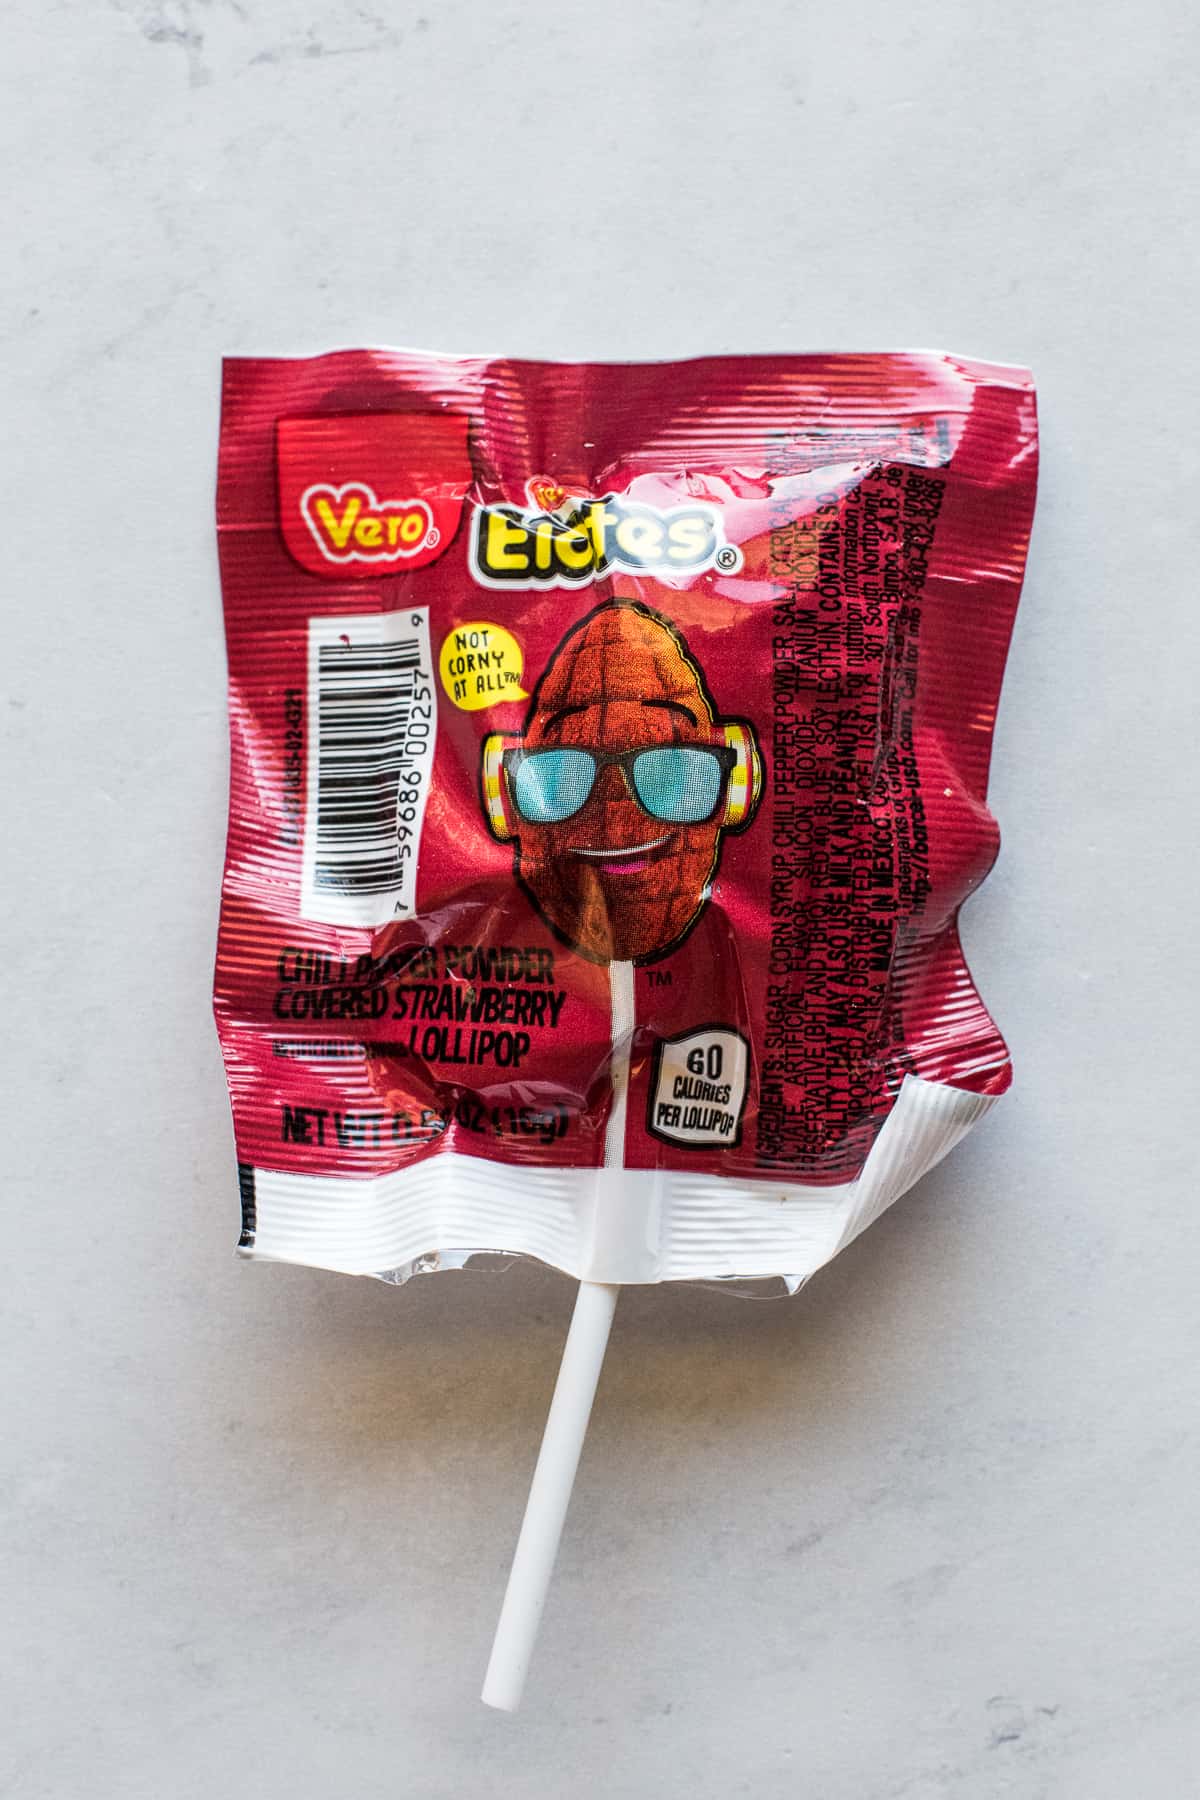 Vero Elotes chili powder covered strawberry lollipop